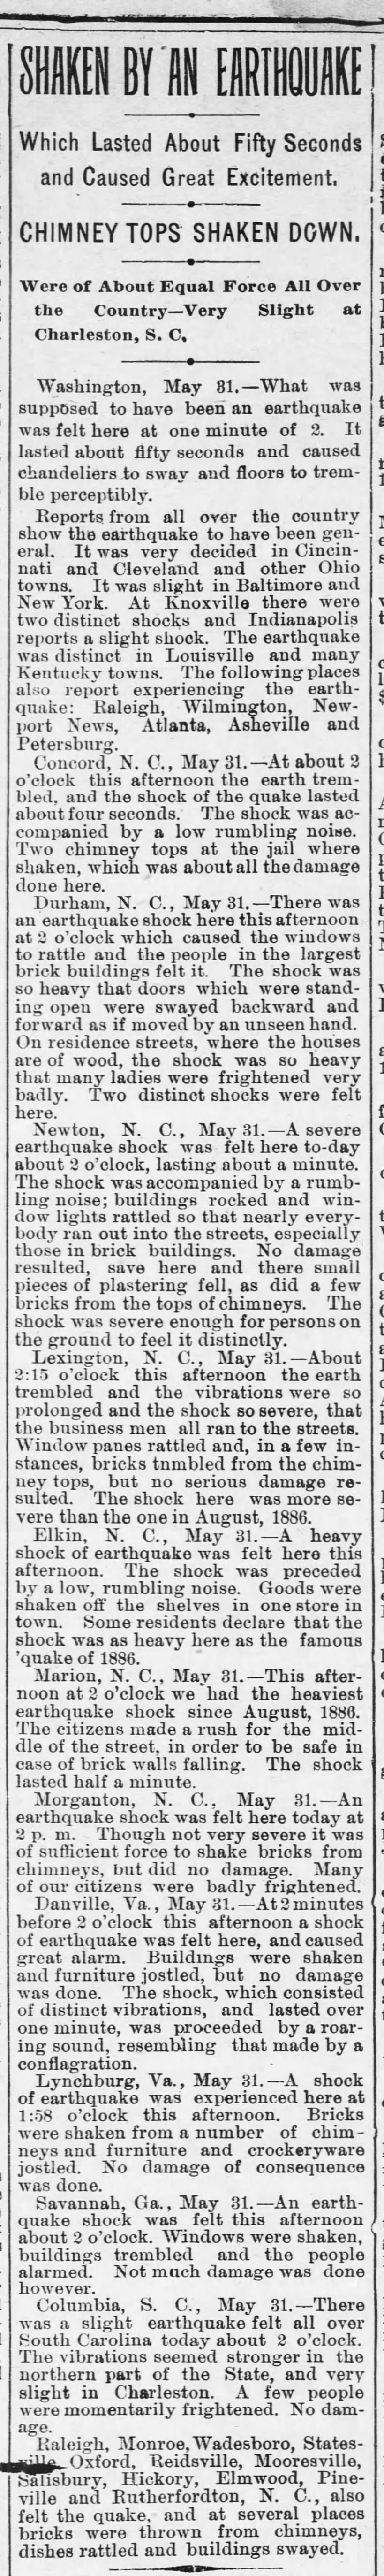 04 June 1897 The Warren Record (Warrenton, NC), p.3.